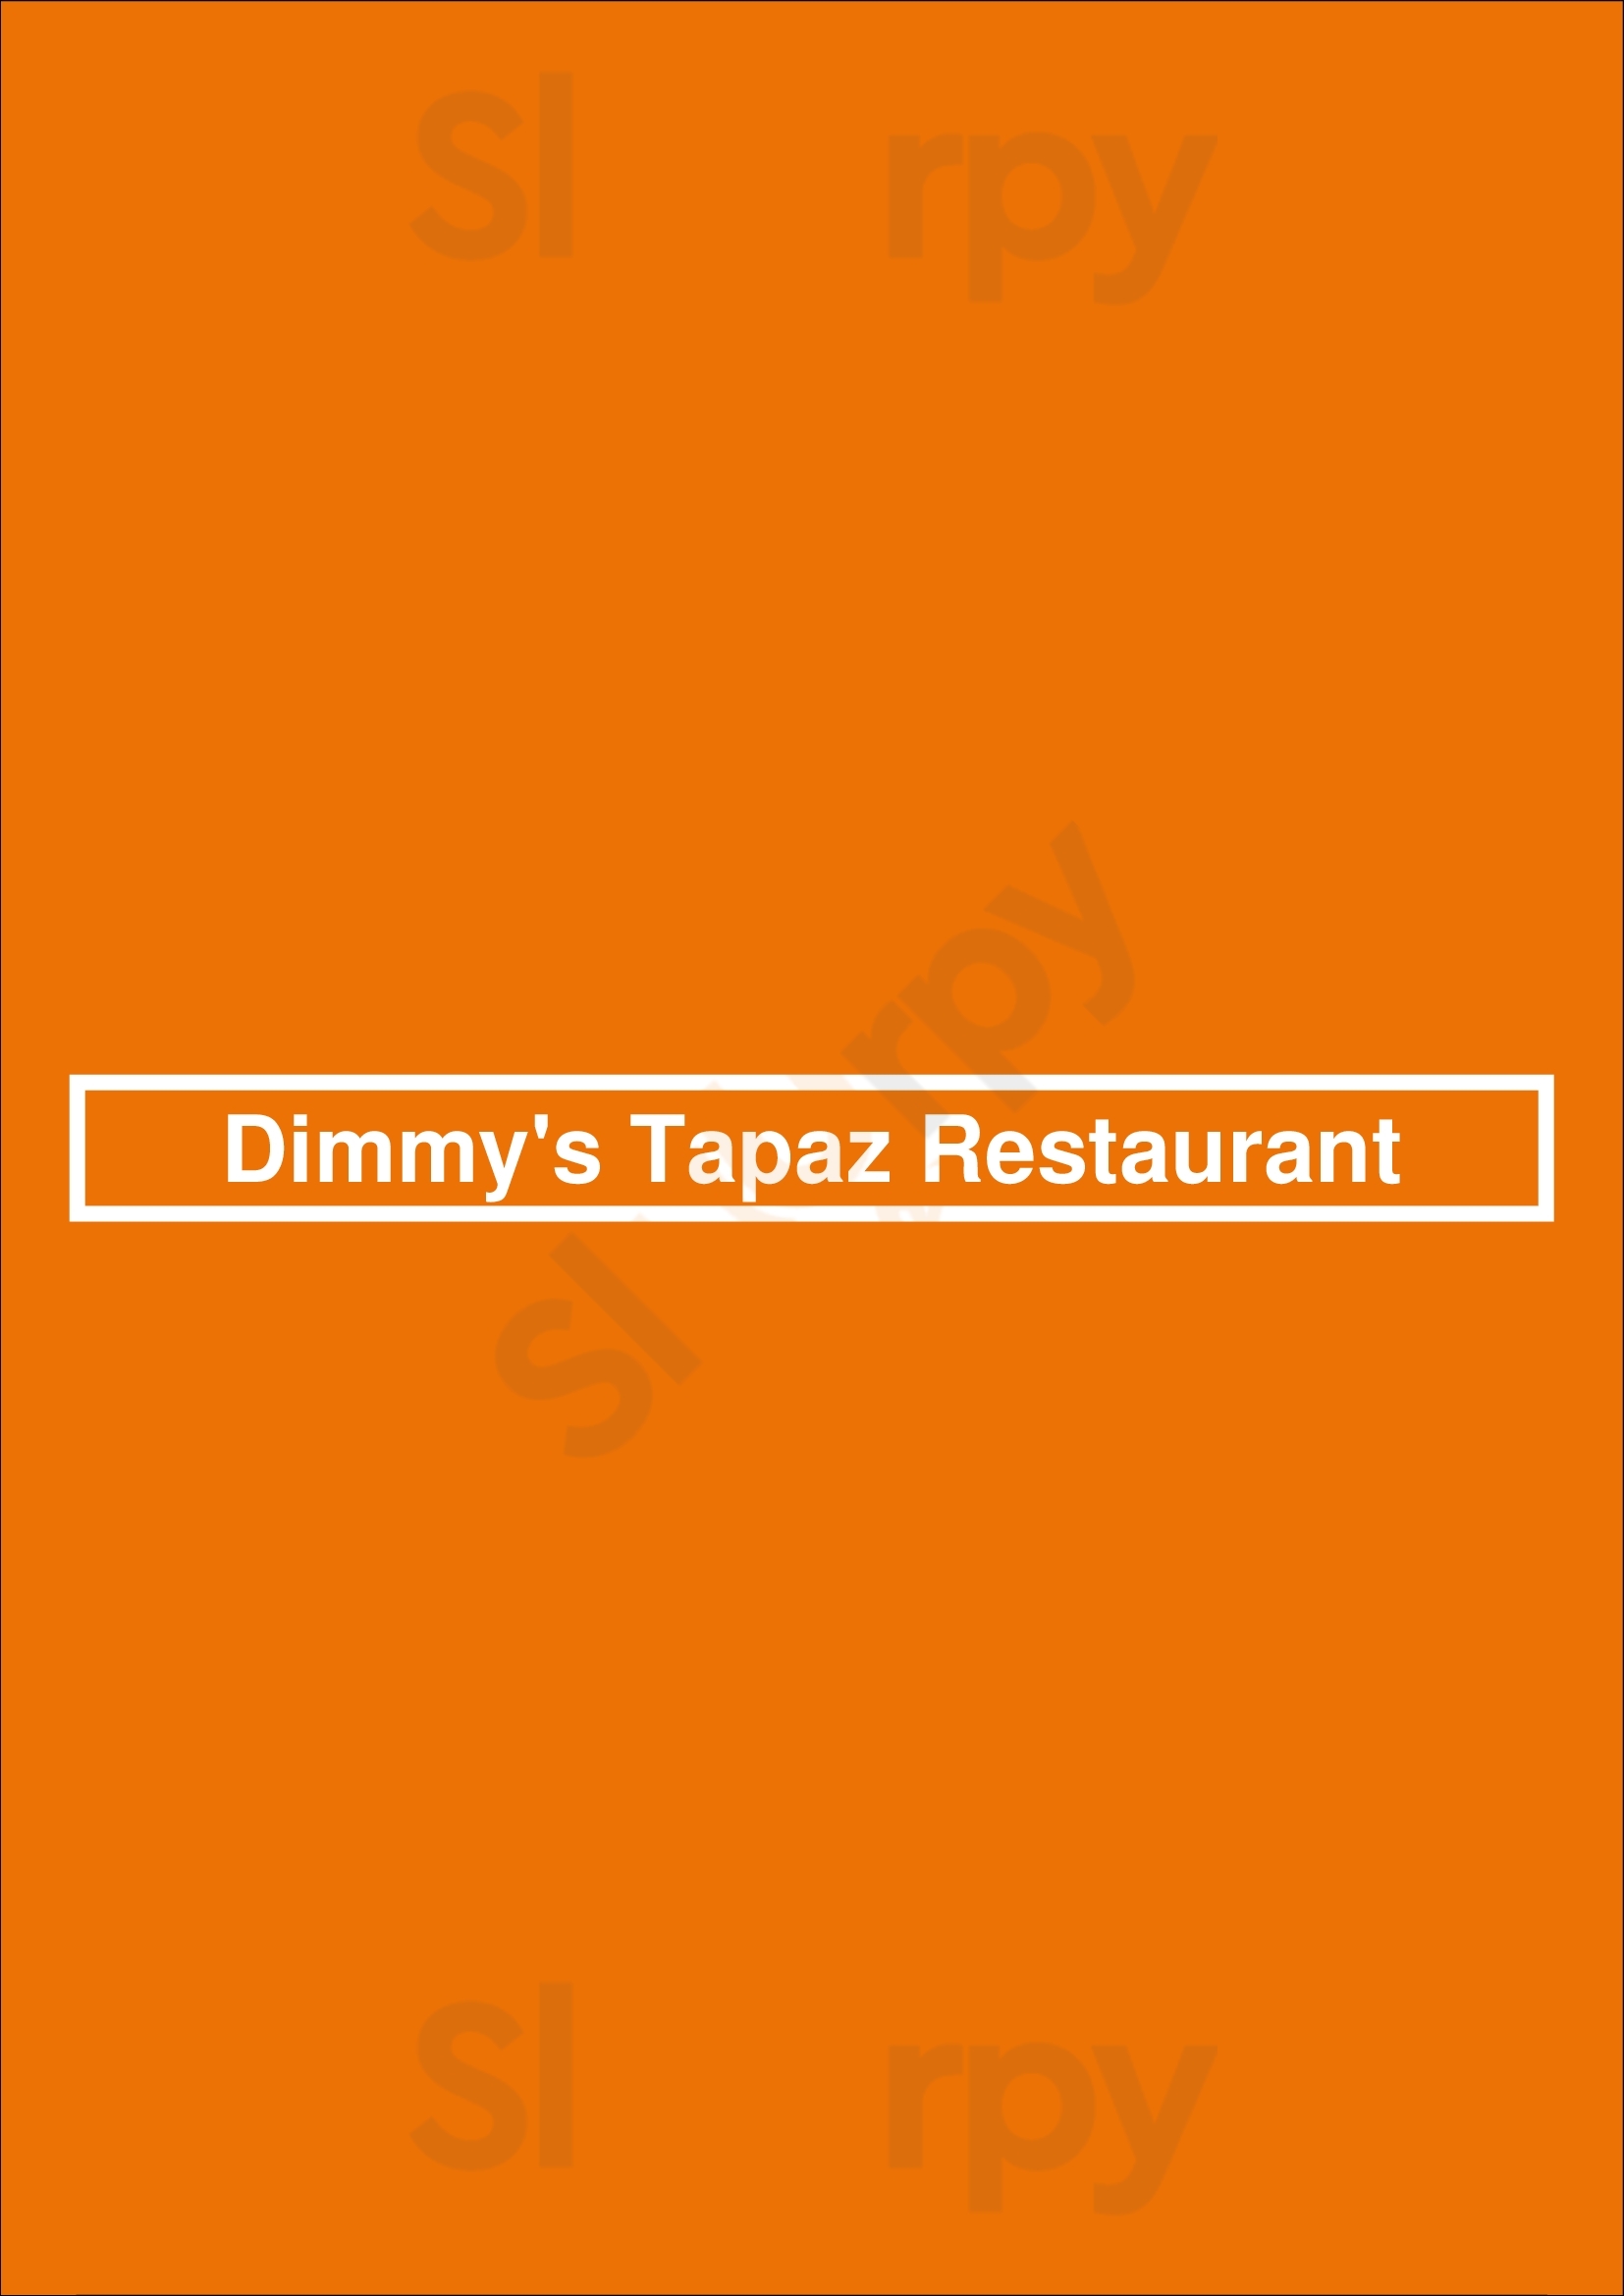 Dimmy's Tapaz Restaurant Veldhoven Menu - 1